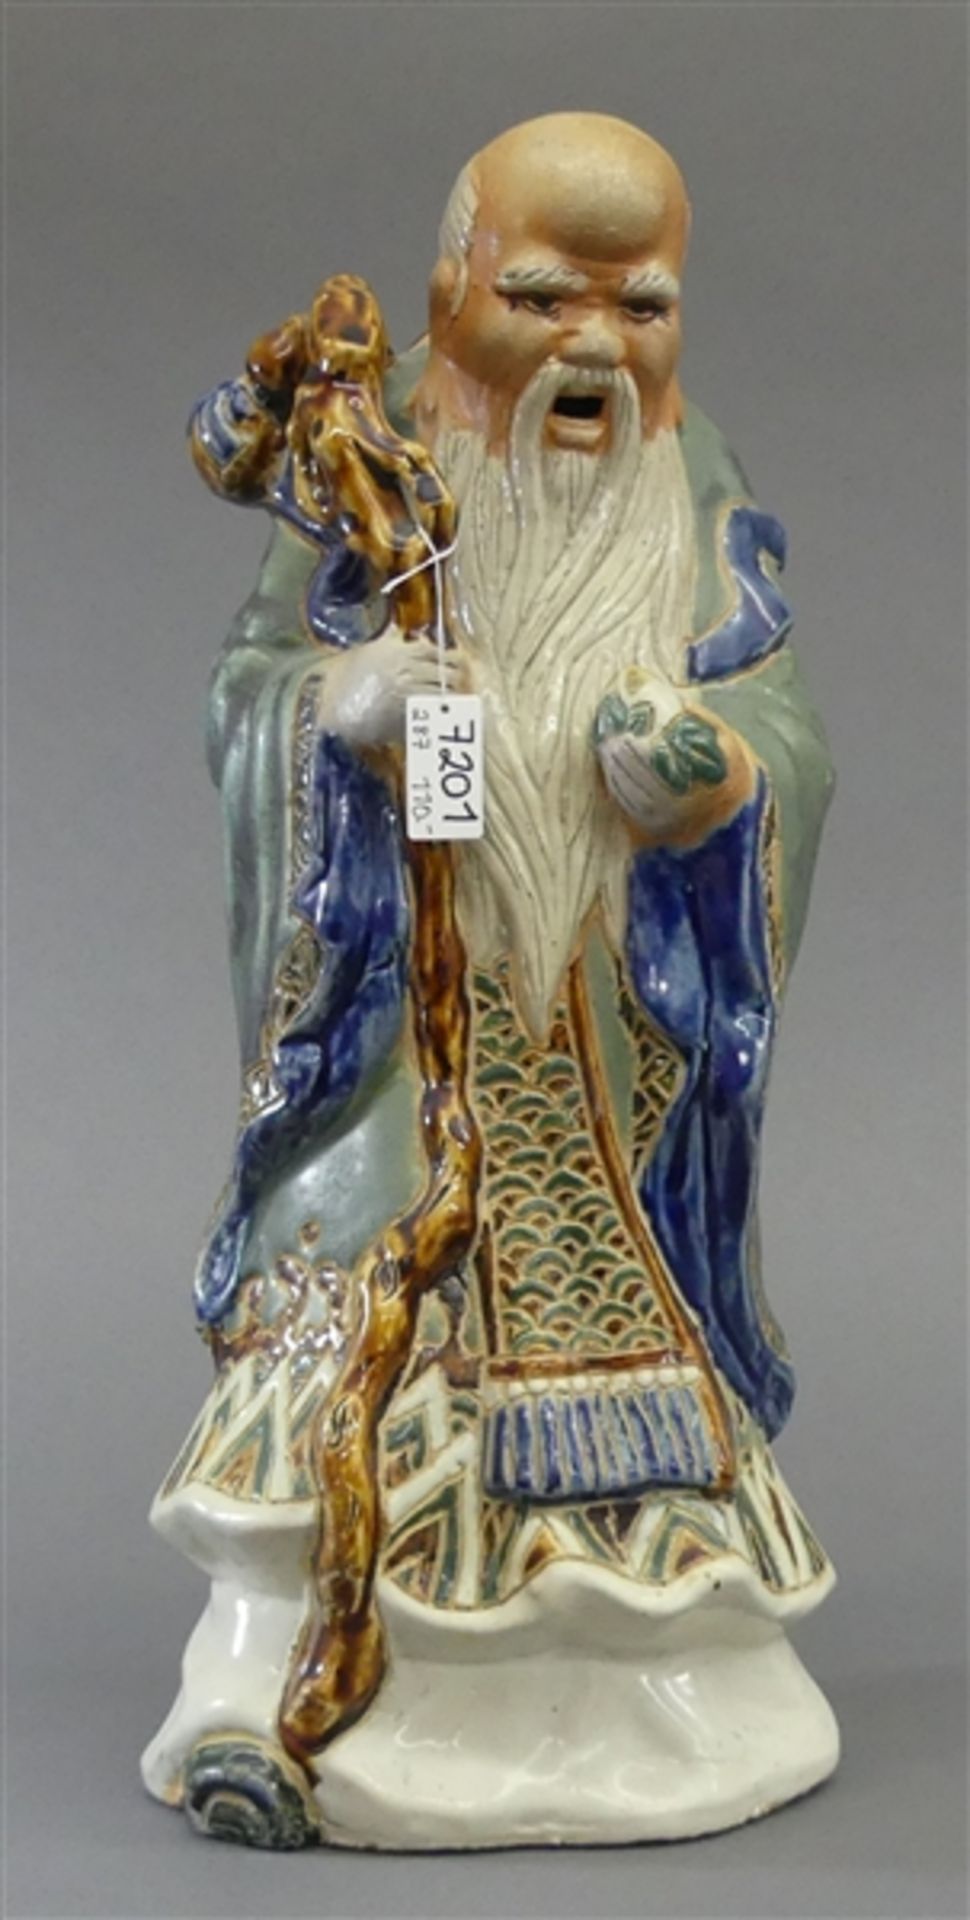 KeramikskulpturChina, bemalt, Weiser mit Wanderstab, 20. Jh., h 39 cm,